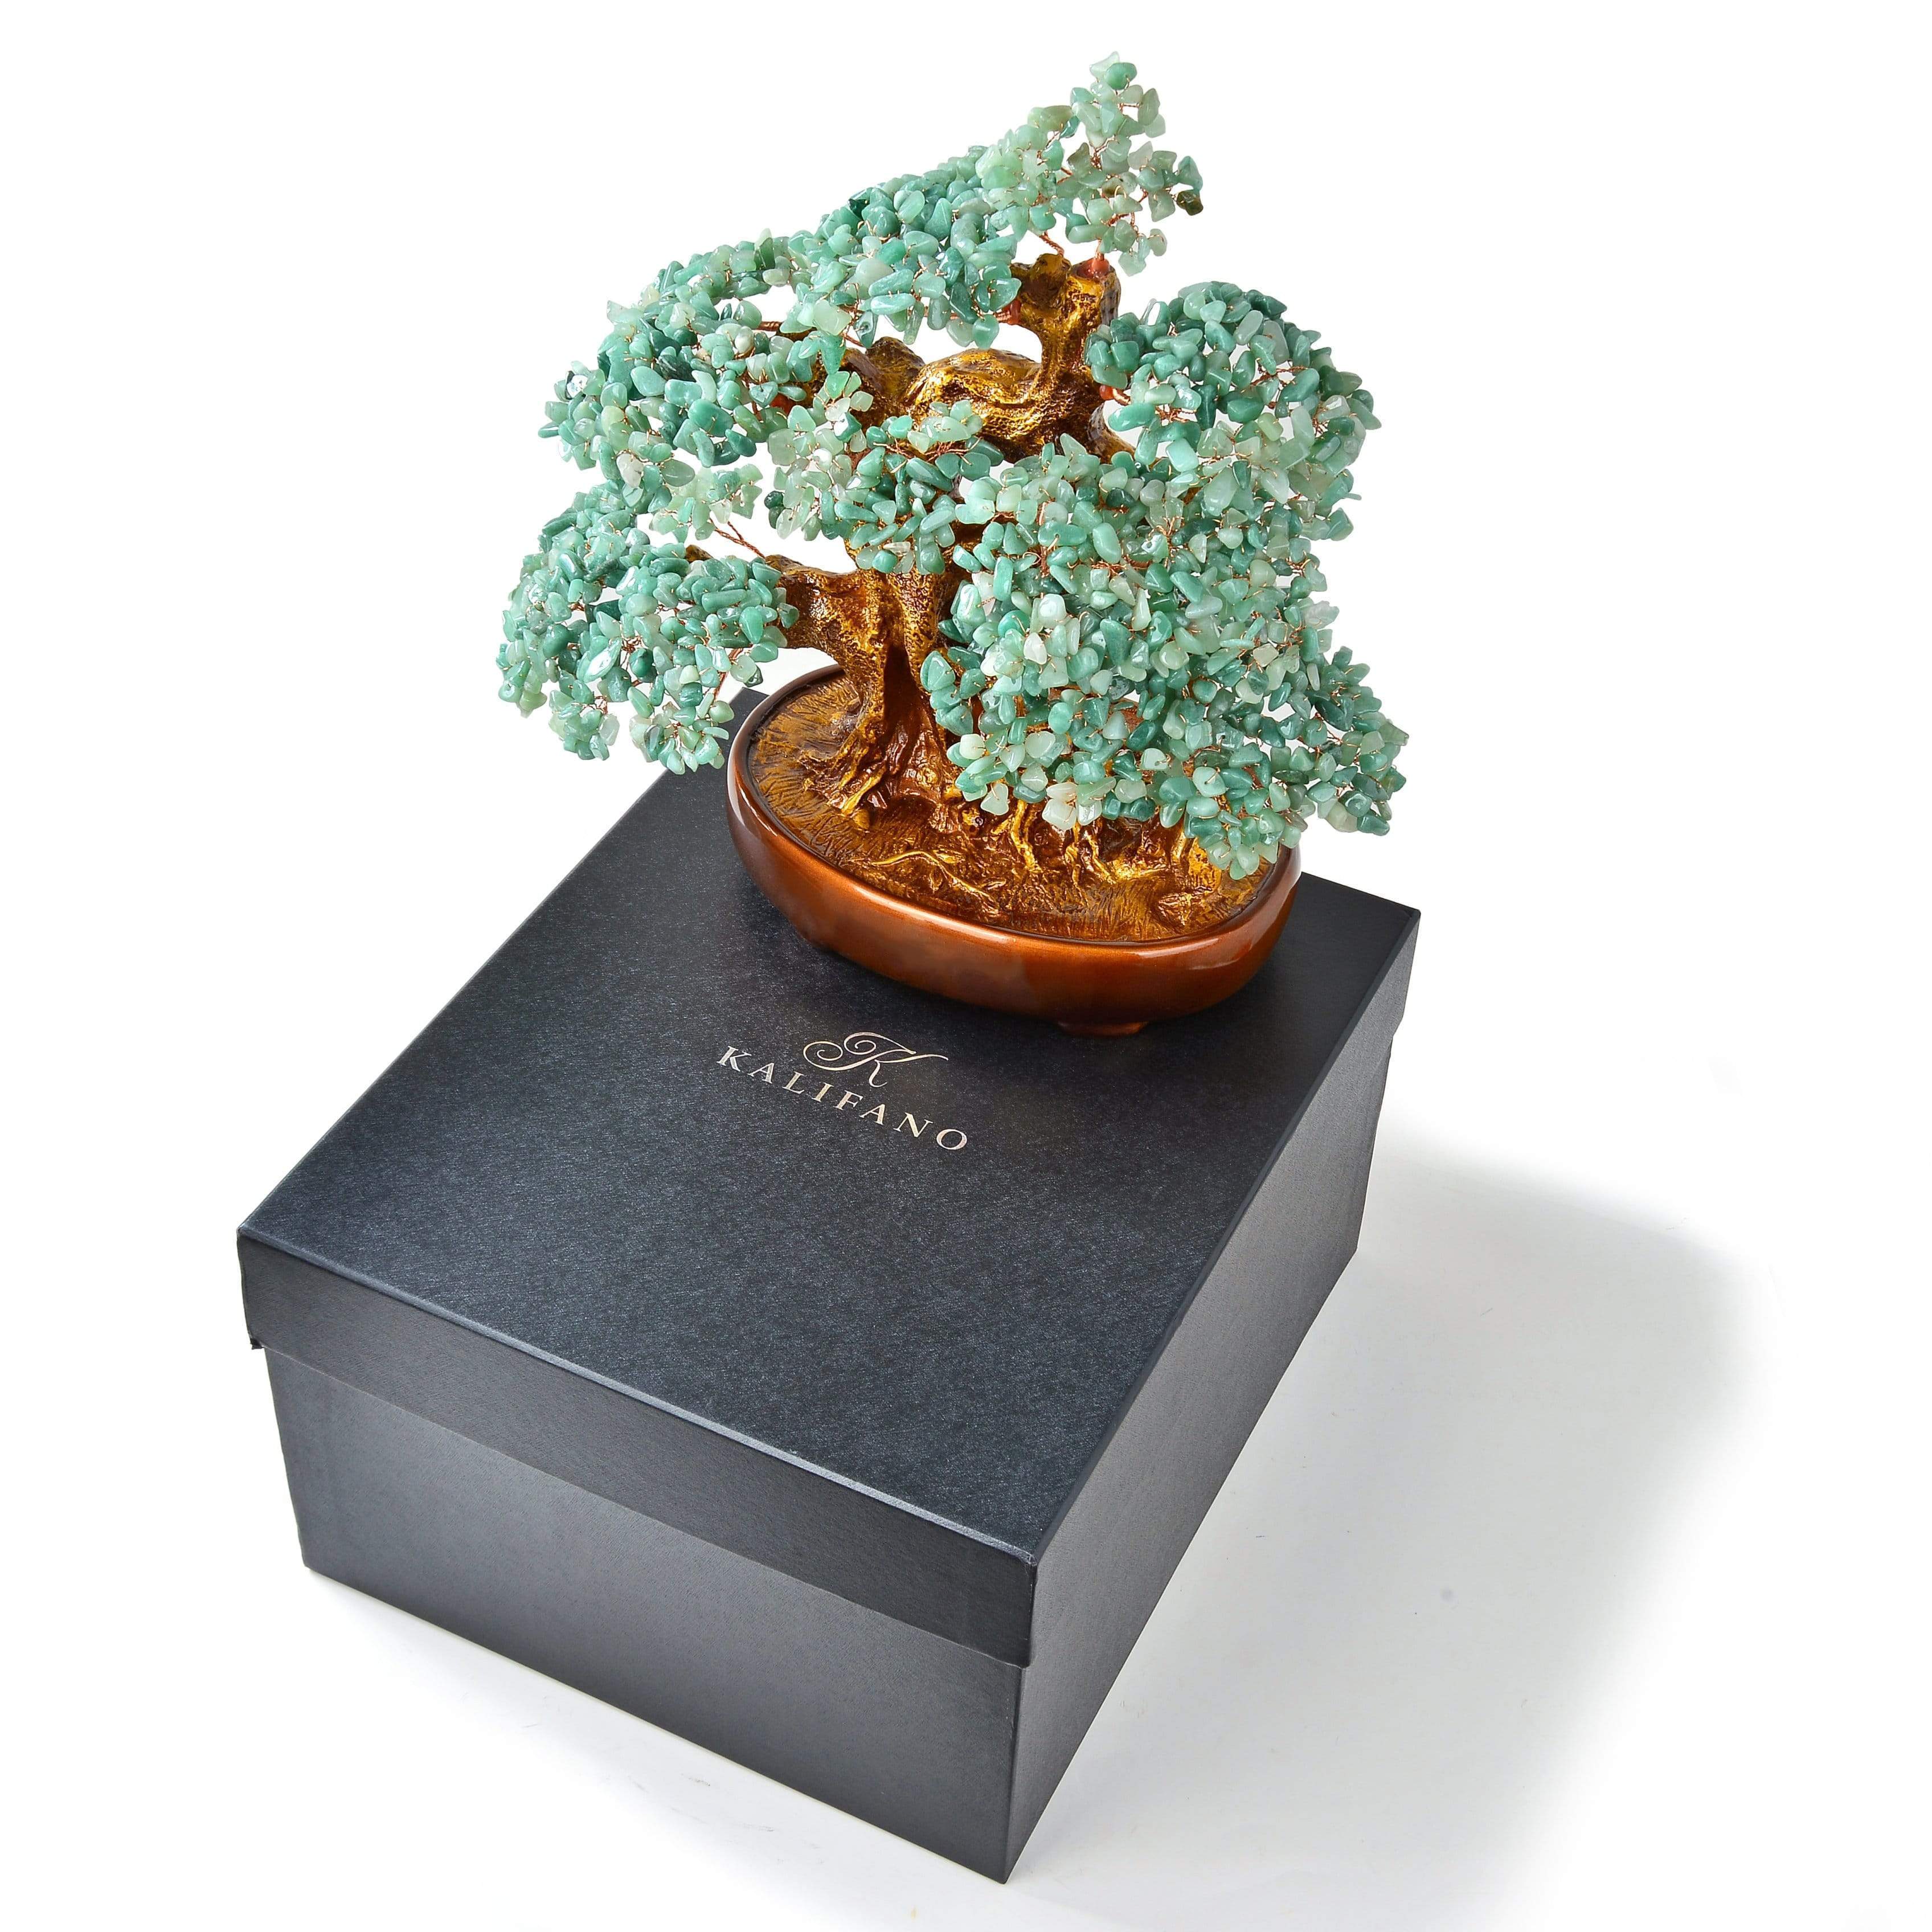 Kalifano Gemstone Trees Aventurine Tree of Life on Resin and Wood Base with 1,251 Natural Gemstones K9150N-AV